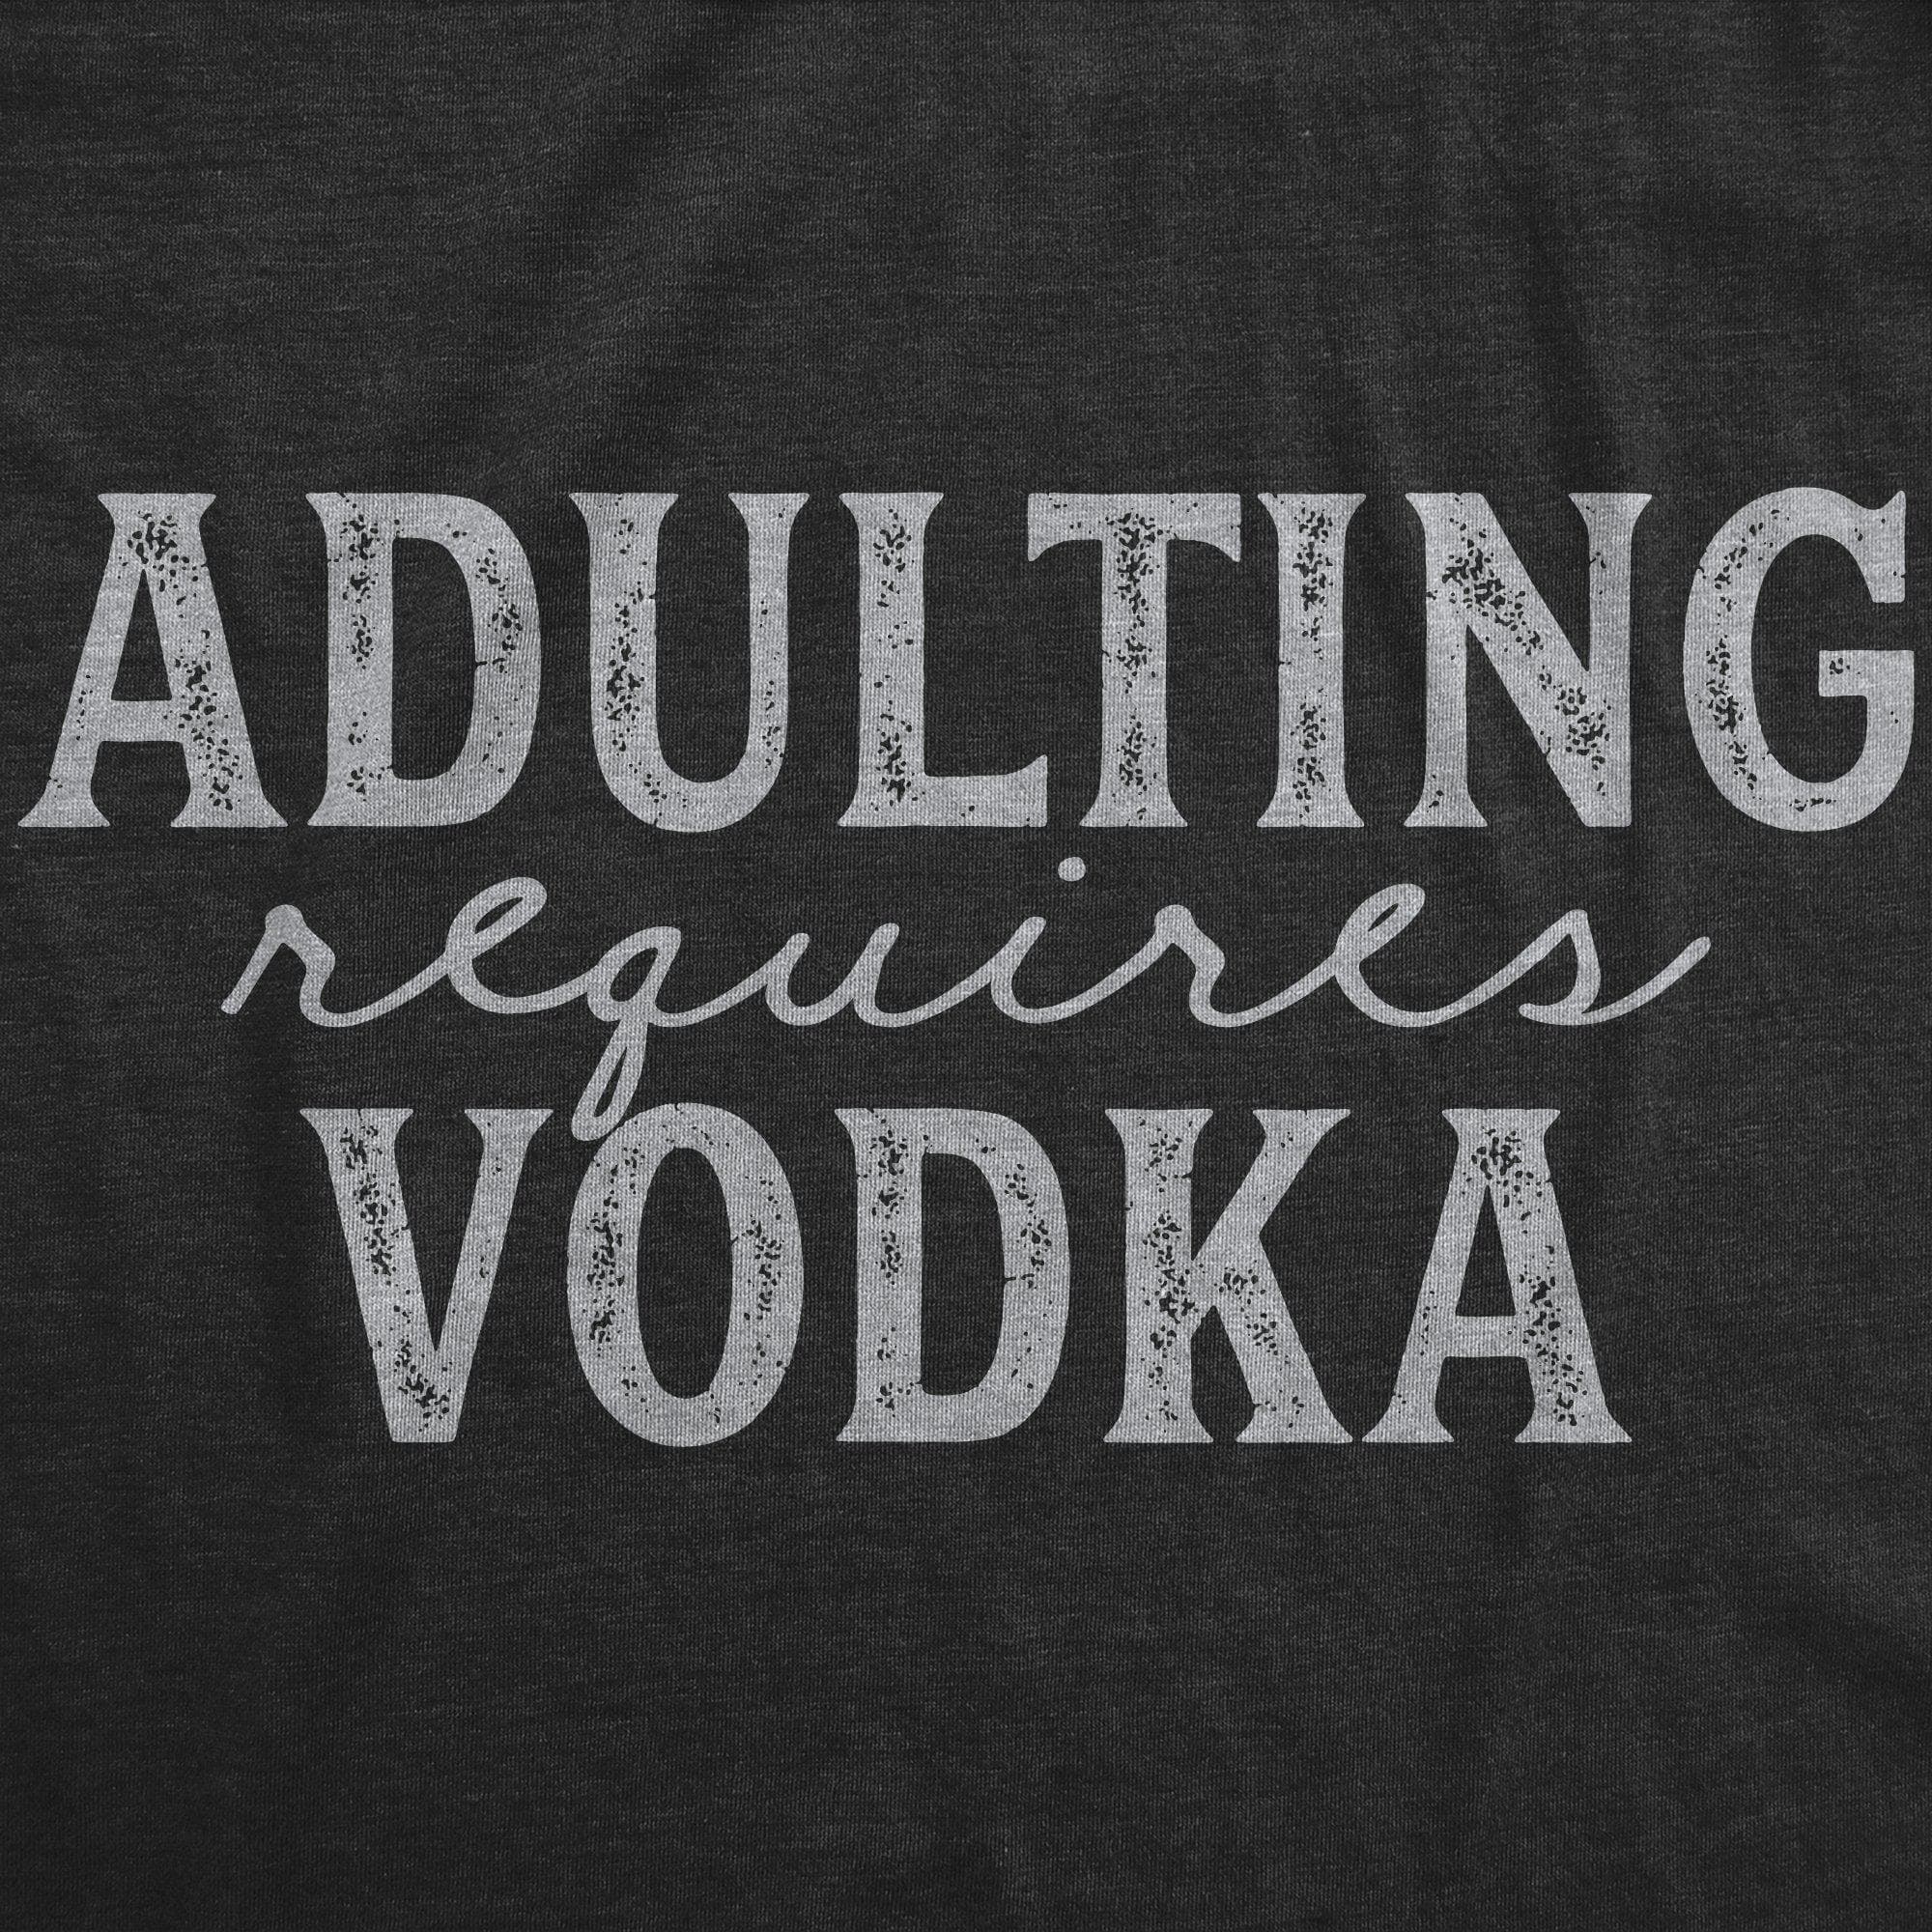 Adulting Requires Vodka Men's Tshirt - Crazy Dog T-Shirts